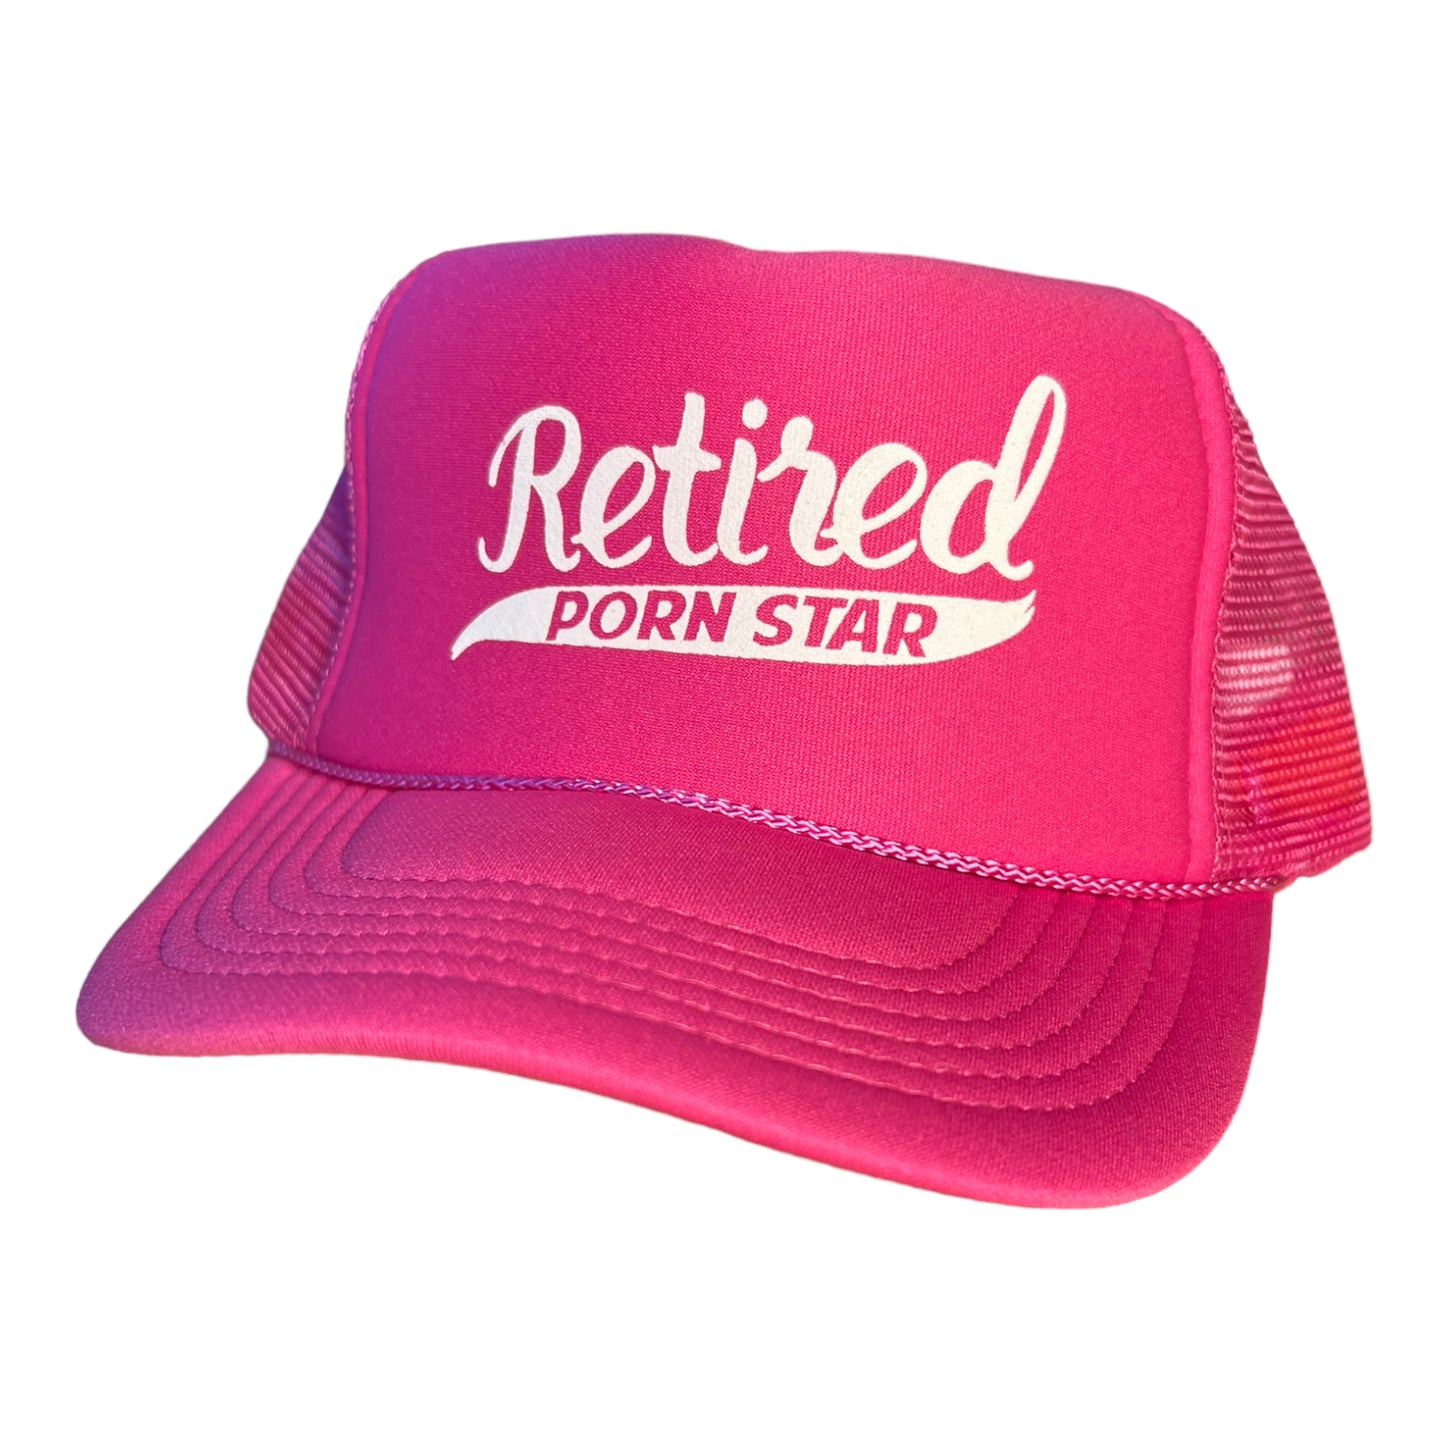 Retired Porn Star Trucker Hat Funny Trucker Hat Pink